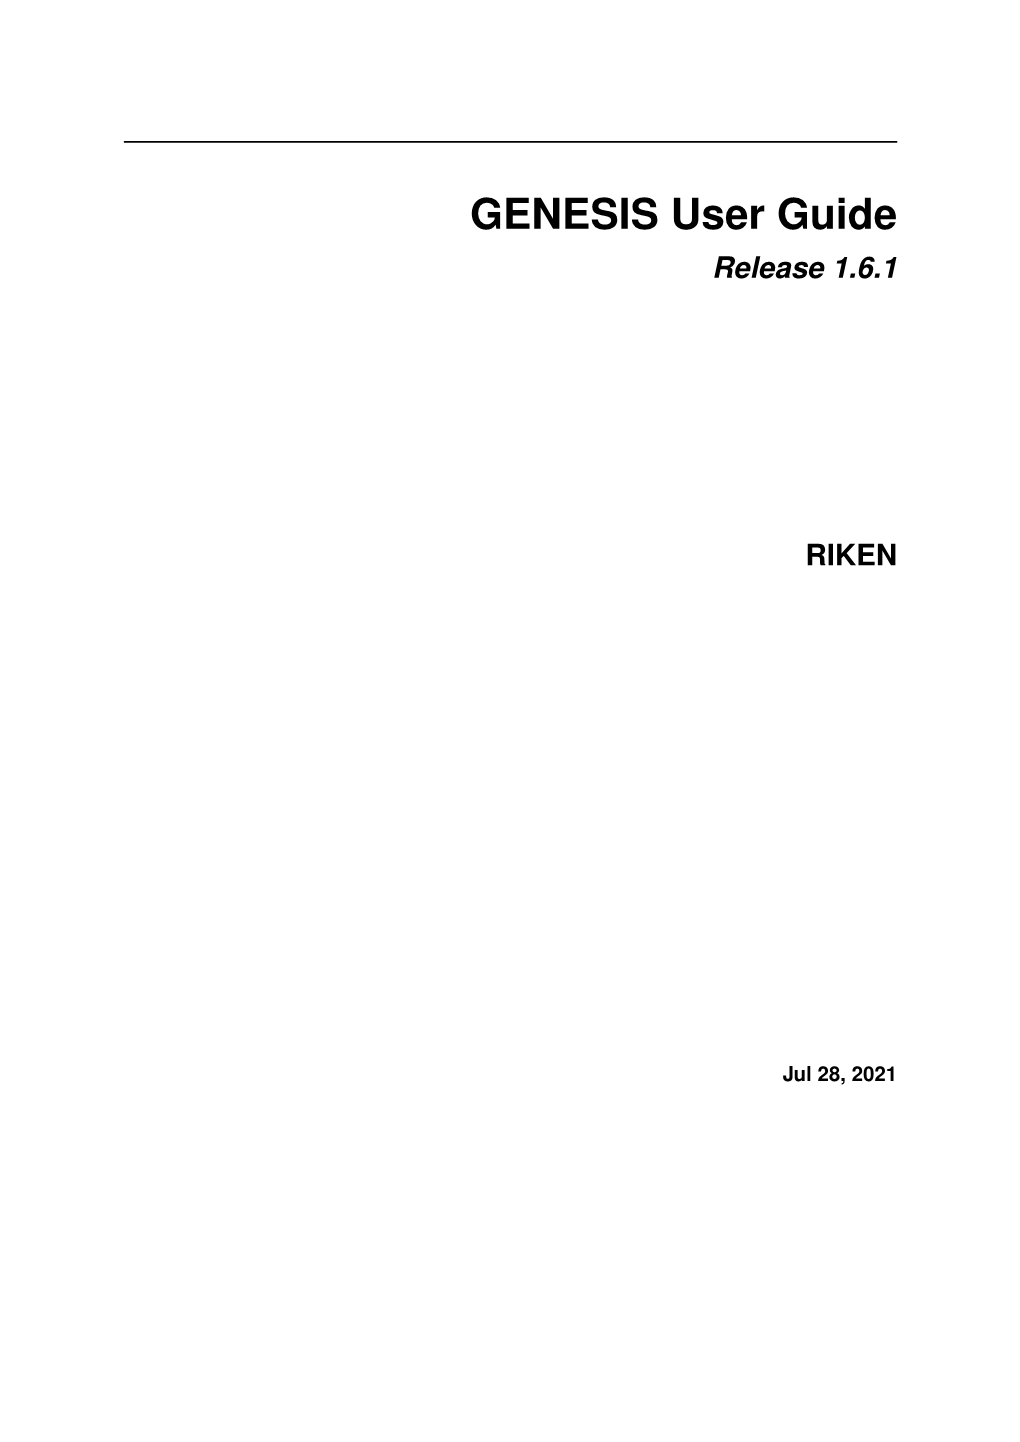 GENESIS User Guide Release 1.6.1